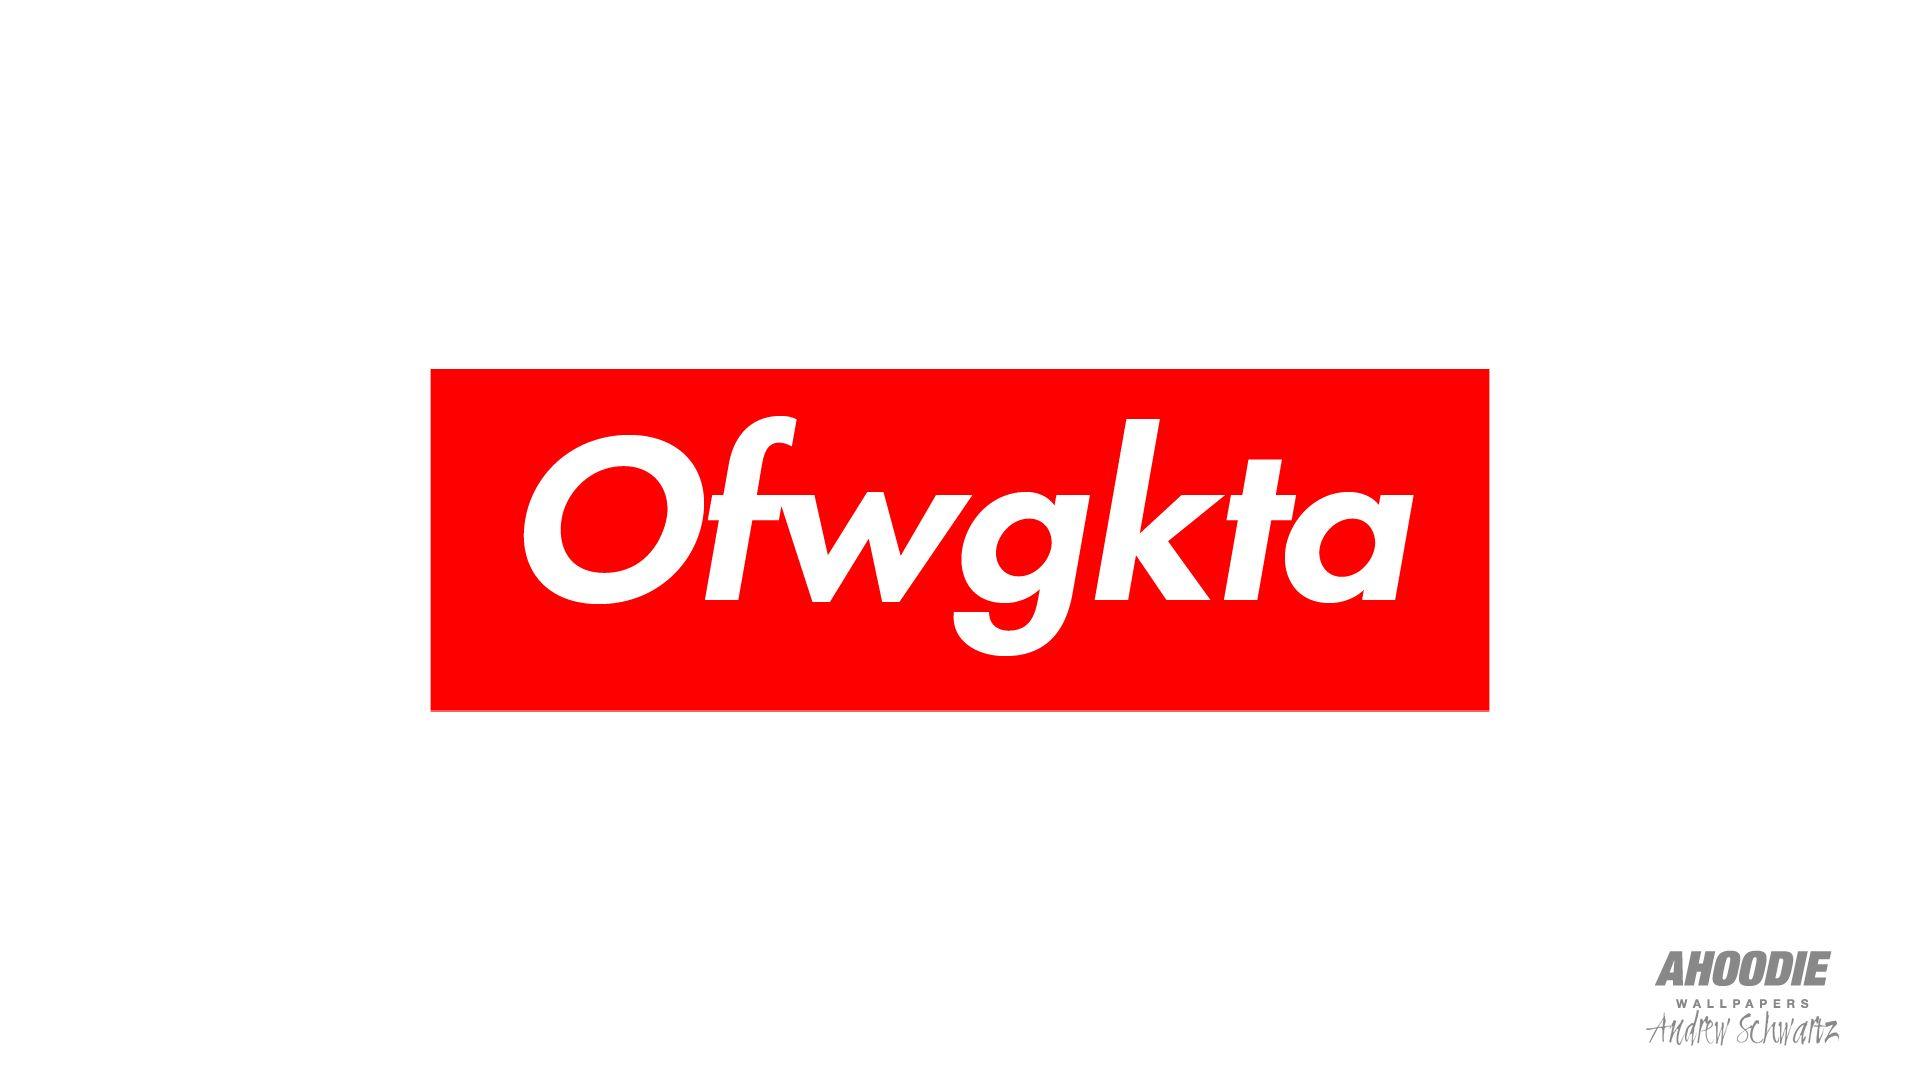 OFWGKTA Logo - Image - OFWGKTA Supreme.jpg | Ofwgkta Wiki | FANDOM powered by Wikia